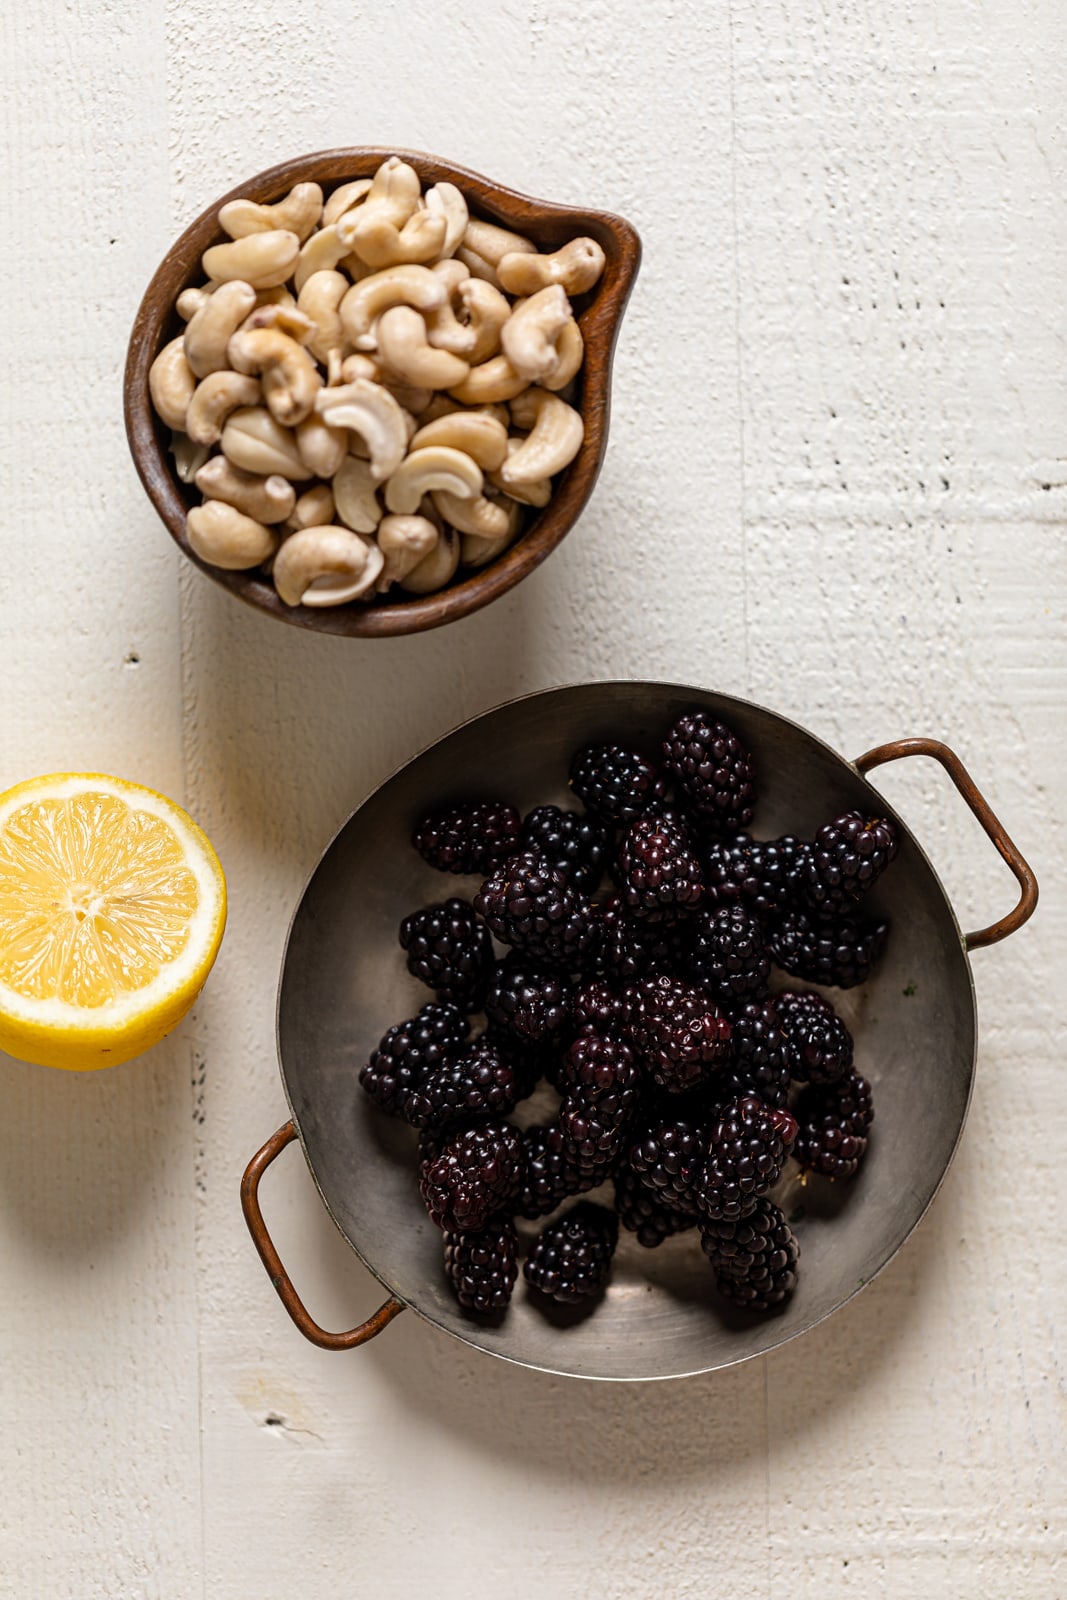 Bowl of cashews and blackberries near a lemon half